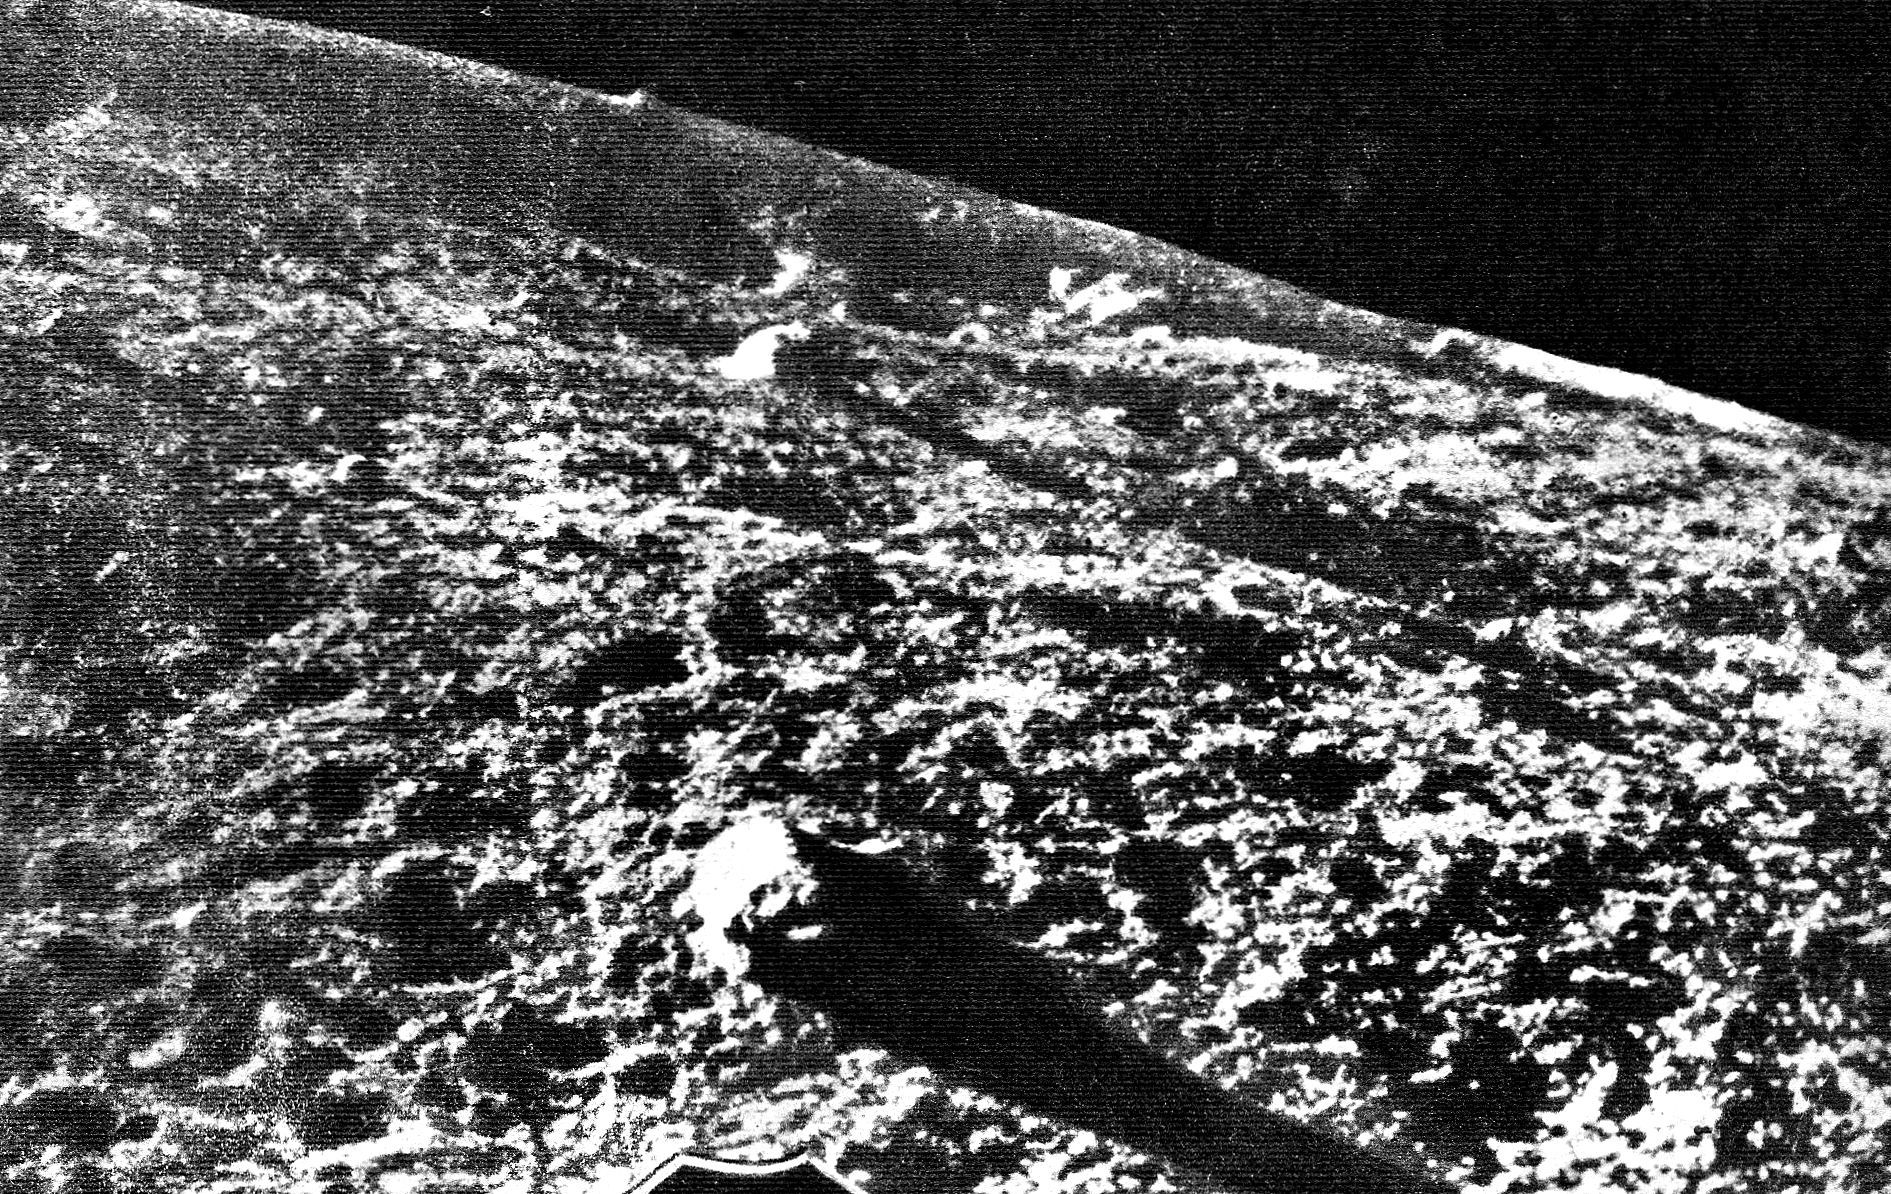 АМС Луна-9 снимки Луны